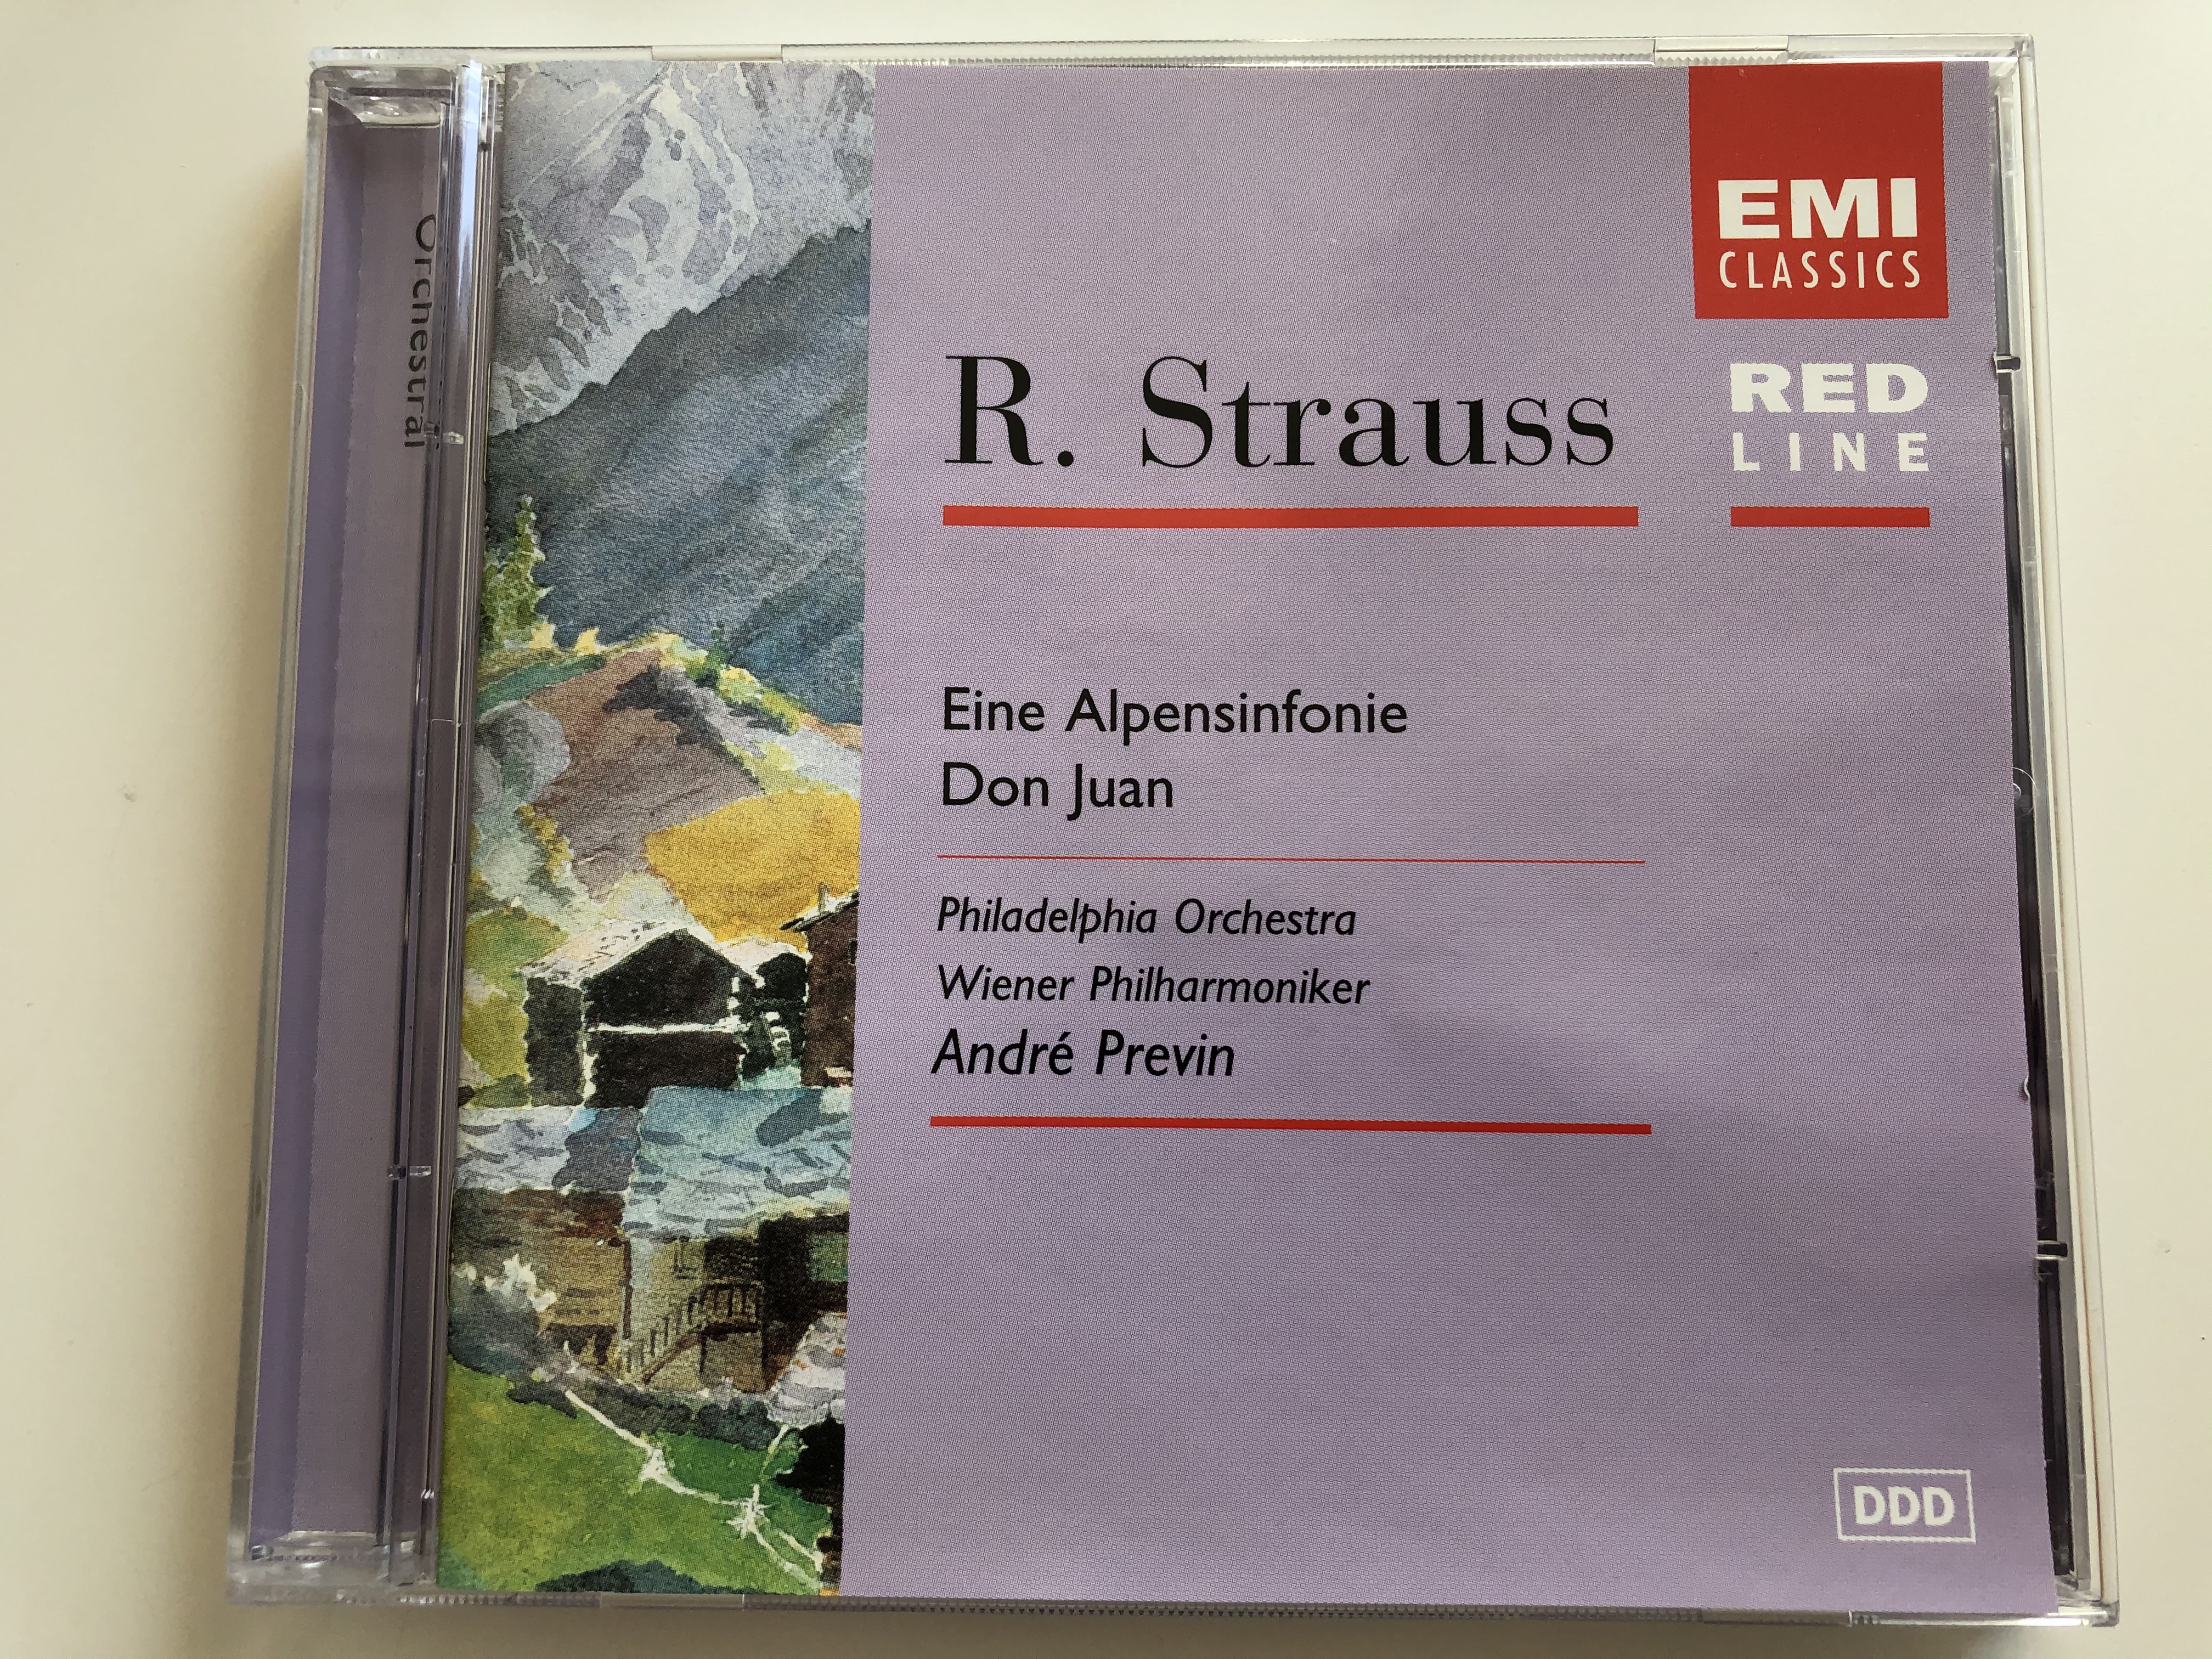 r.-strauss-eine-alpensinfonie-don-juan-philadelphia-orchestra-wiener-philharmoniker-andre-previn-emi-classics-audio-cd-2000-stereo-7243-5-74116-2-2-1-.jpg